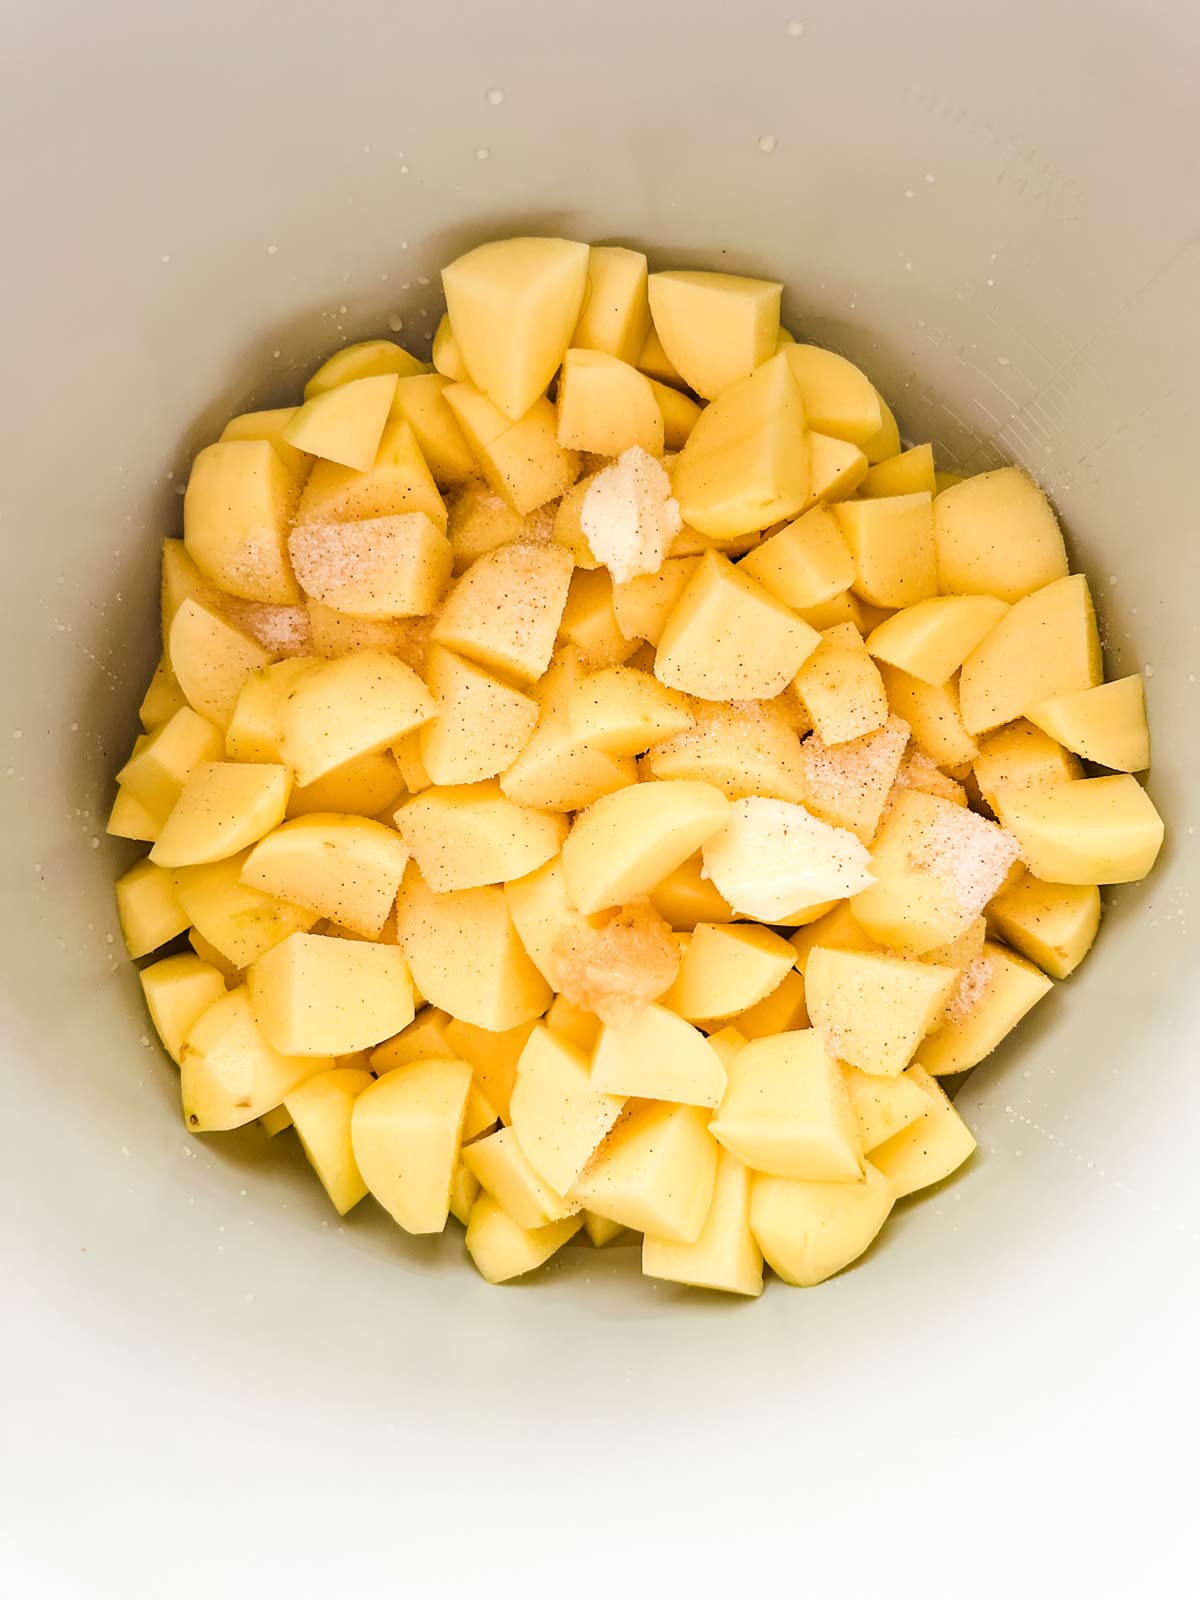 Cubed potatoes with garlic and seasonings in the inner pot of a Ninja Foodi.